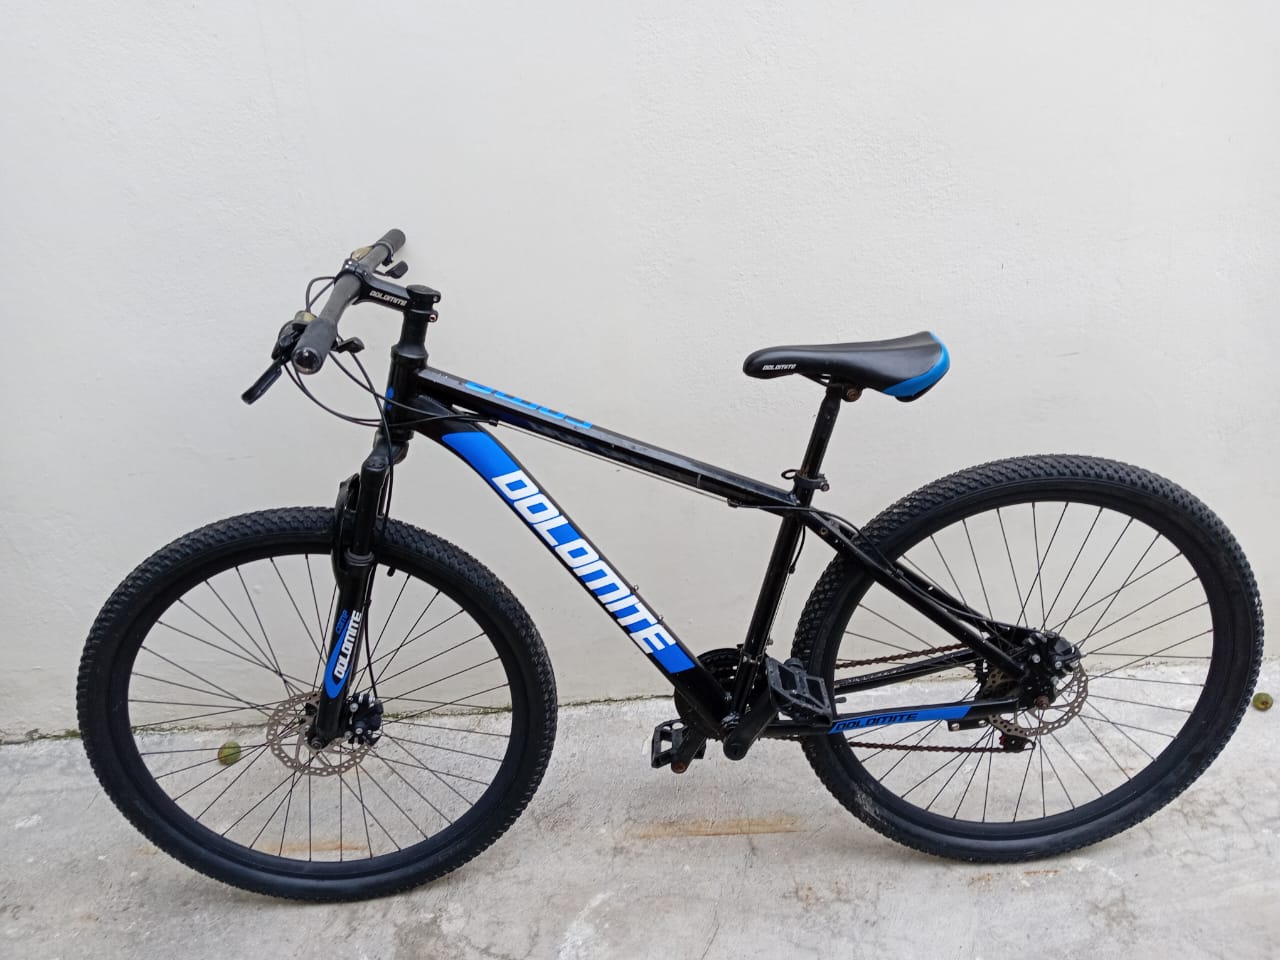 Vendo Bicicleta marca Dolomite negra con detalles azules poco usada Foto 7234011-2.jpg